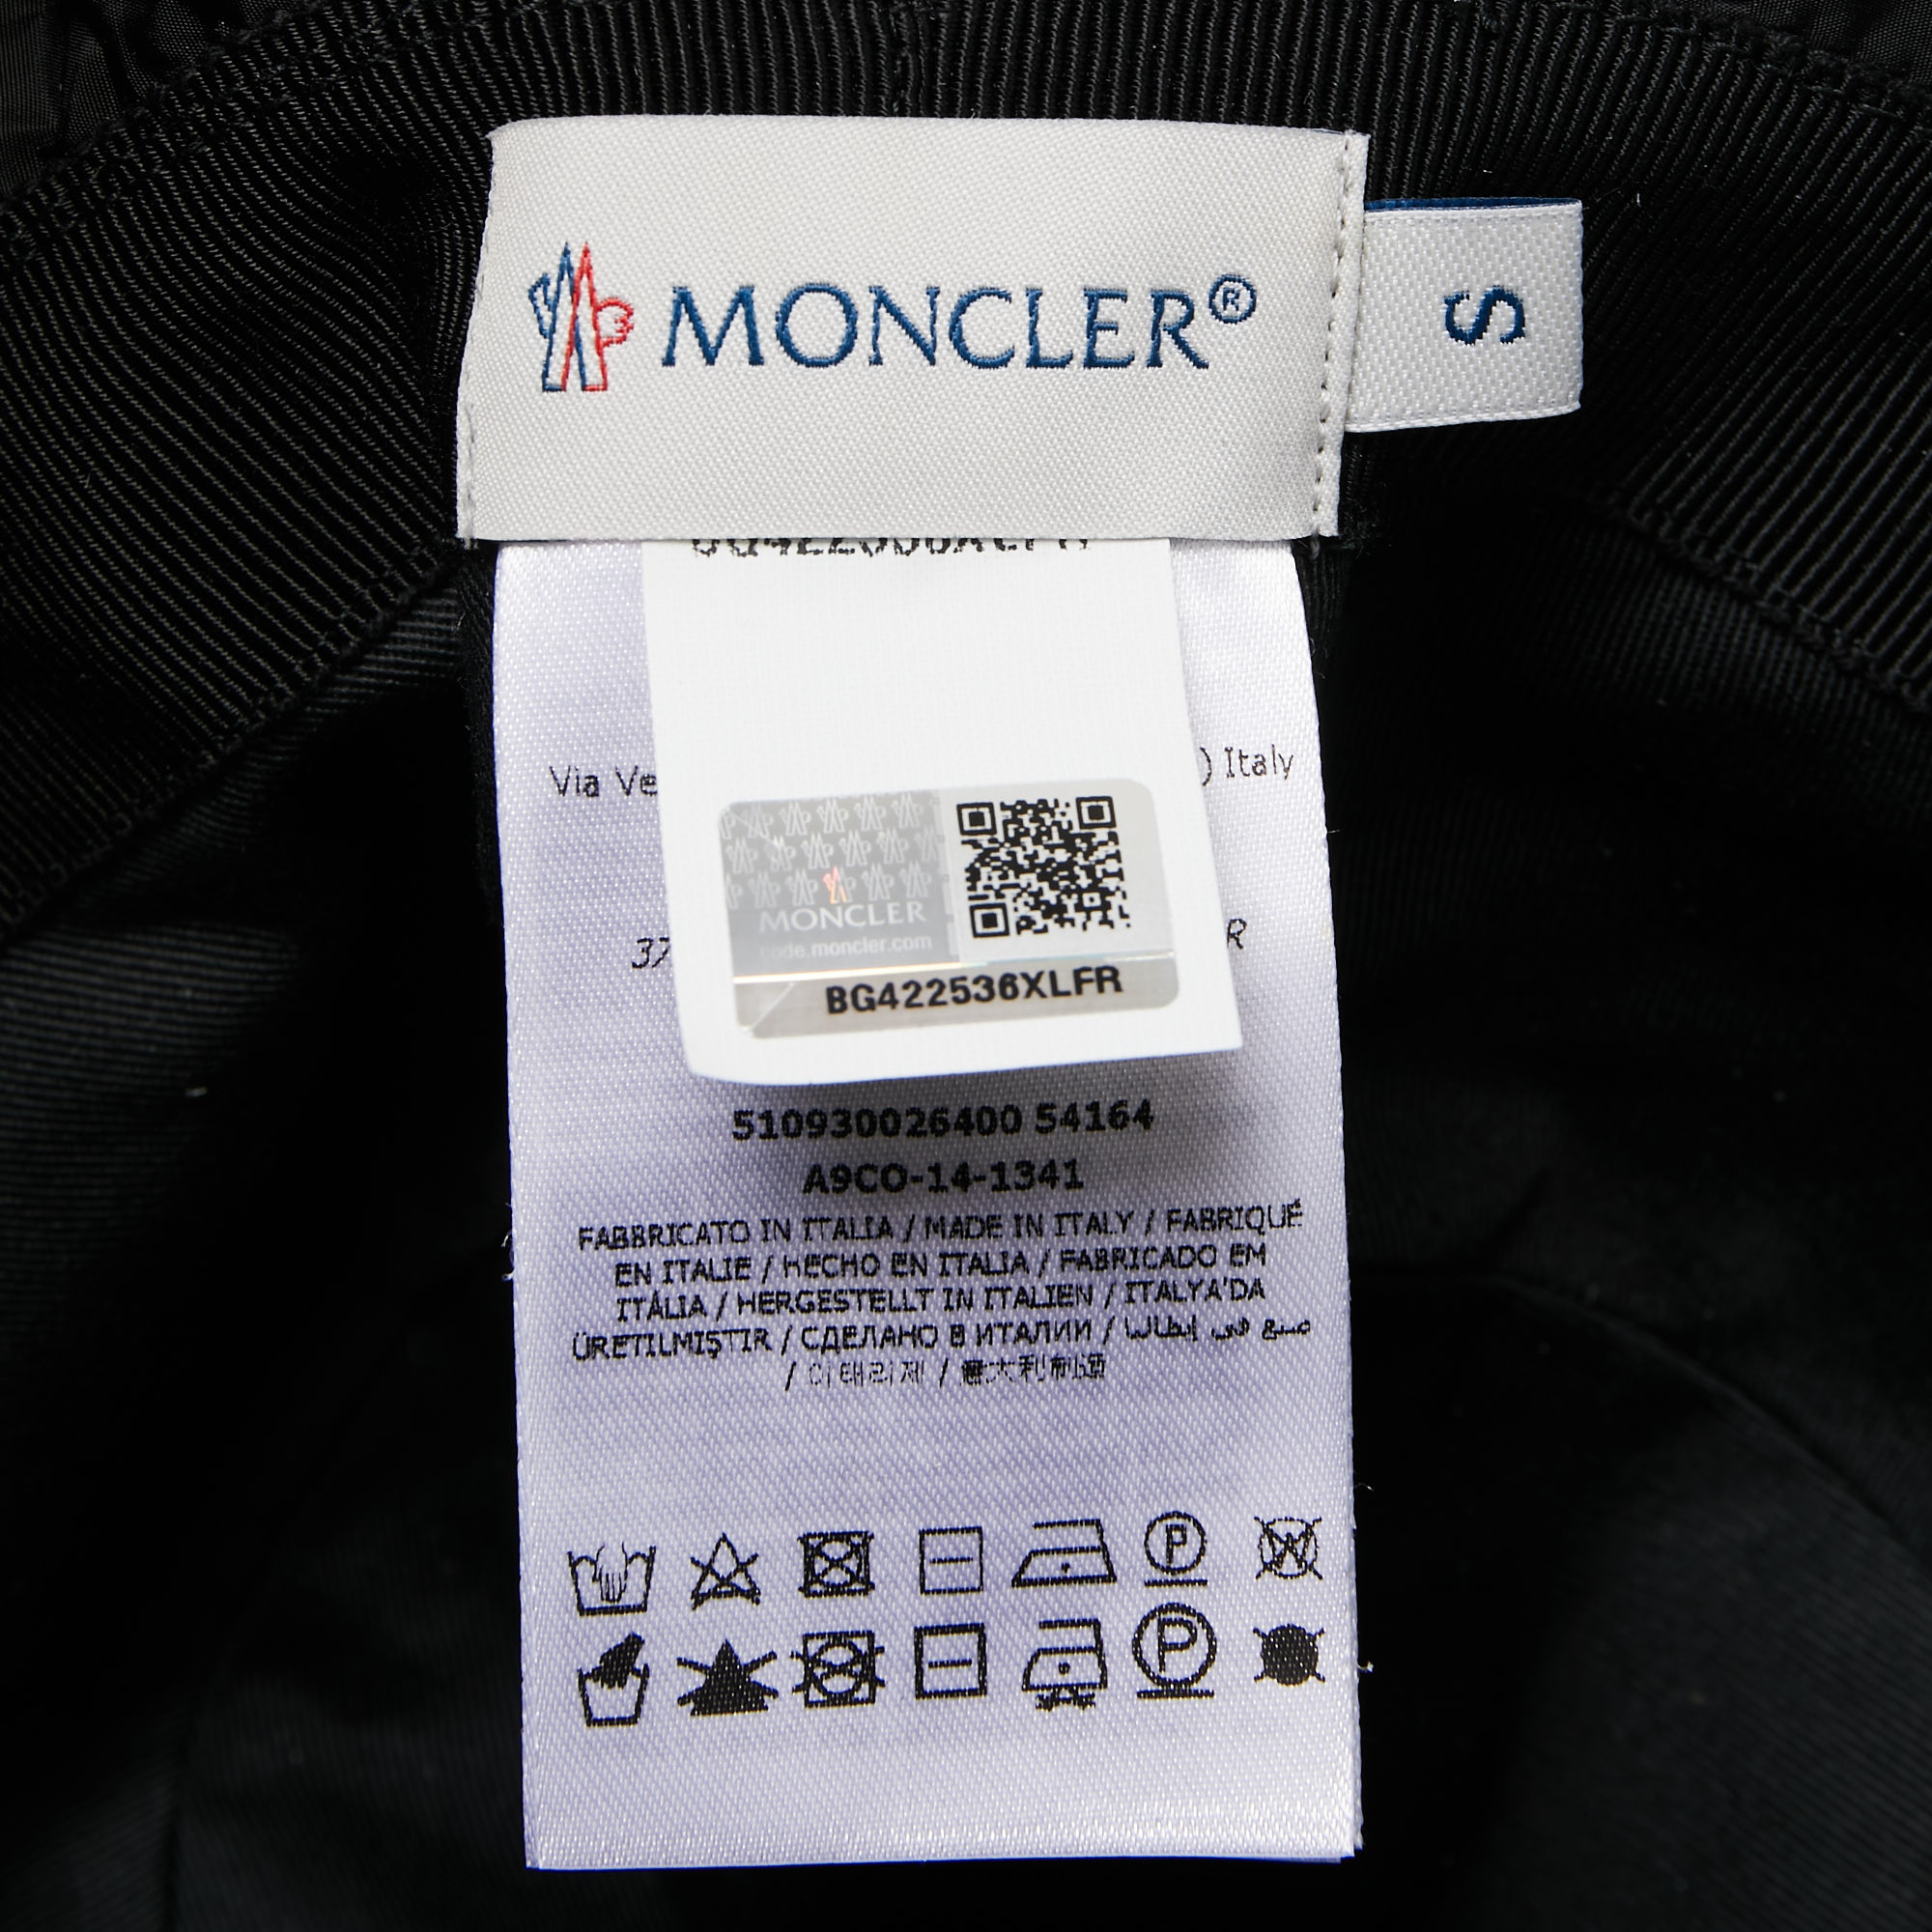 Moncler Black Nylon Bucket Hat S